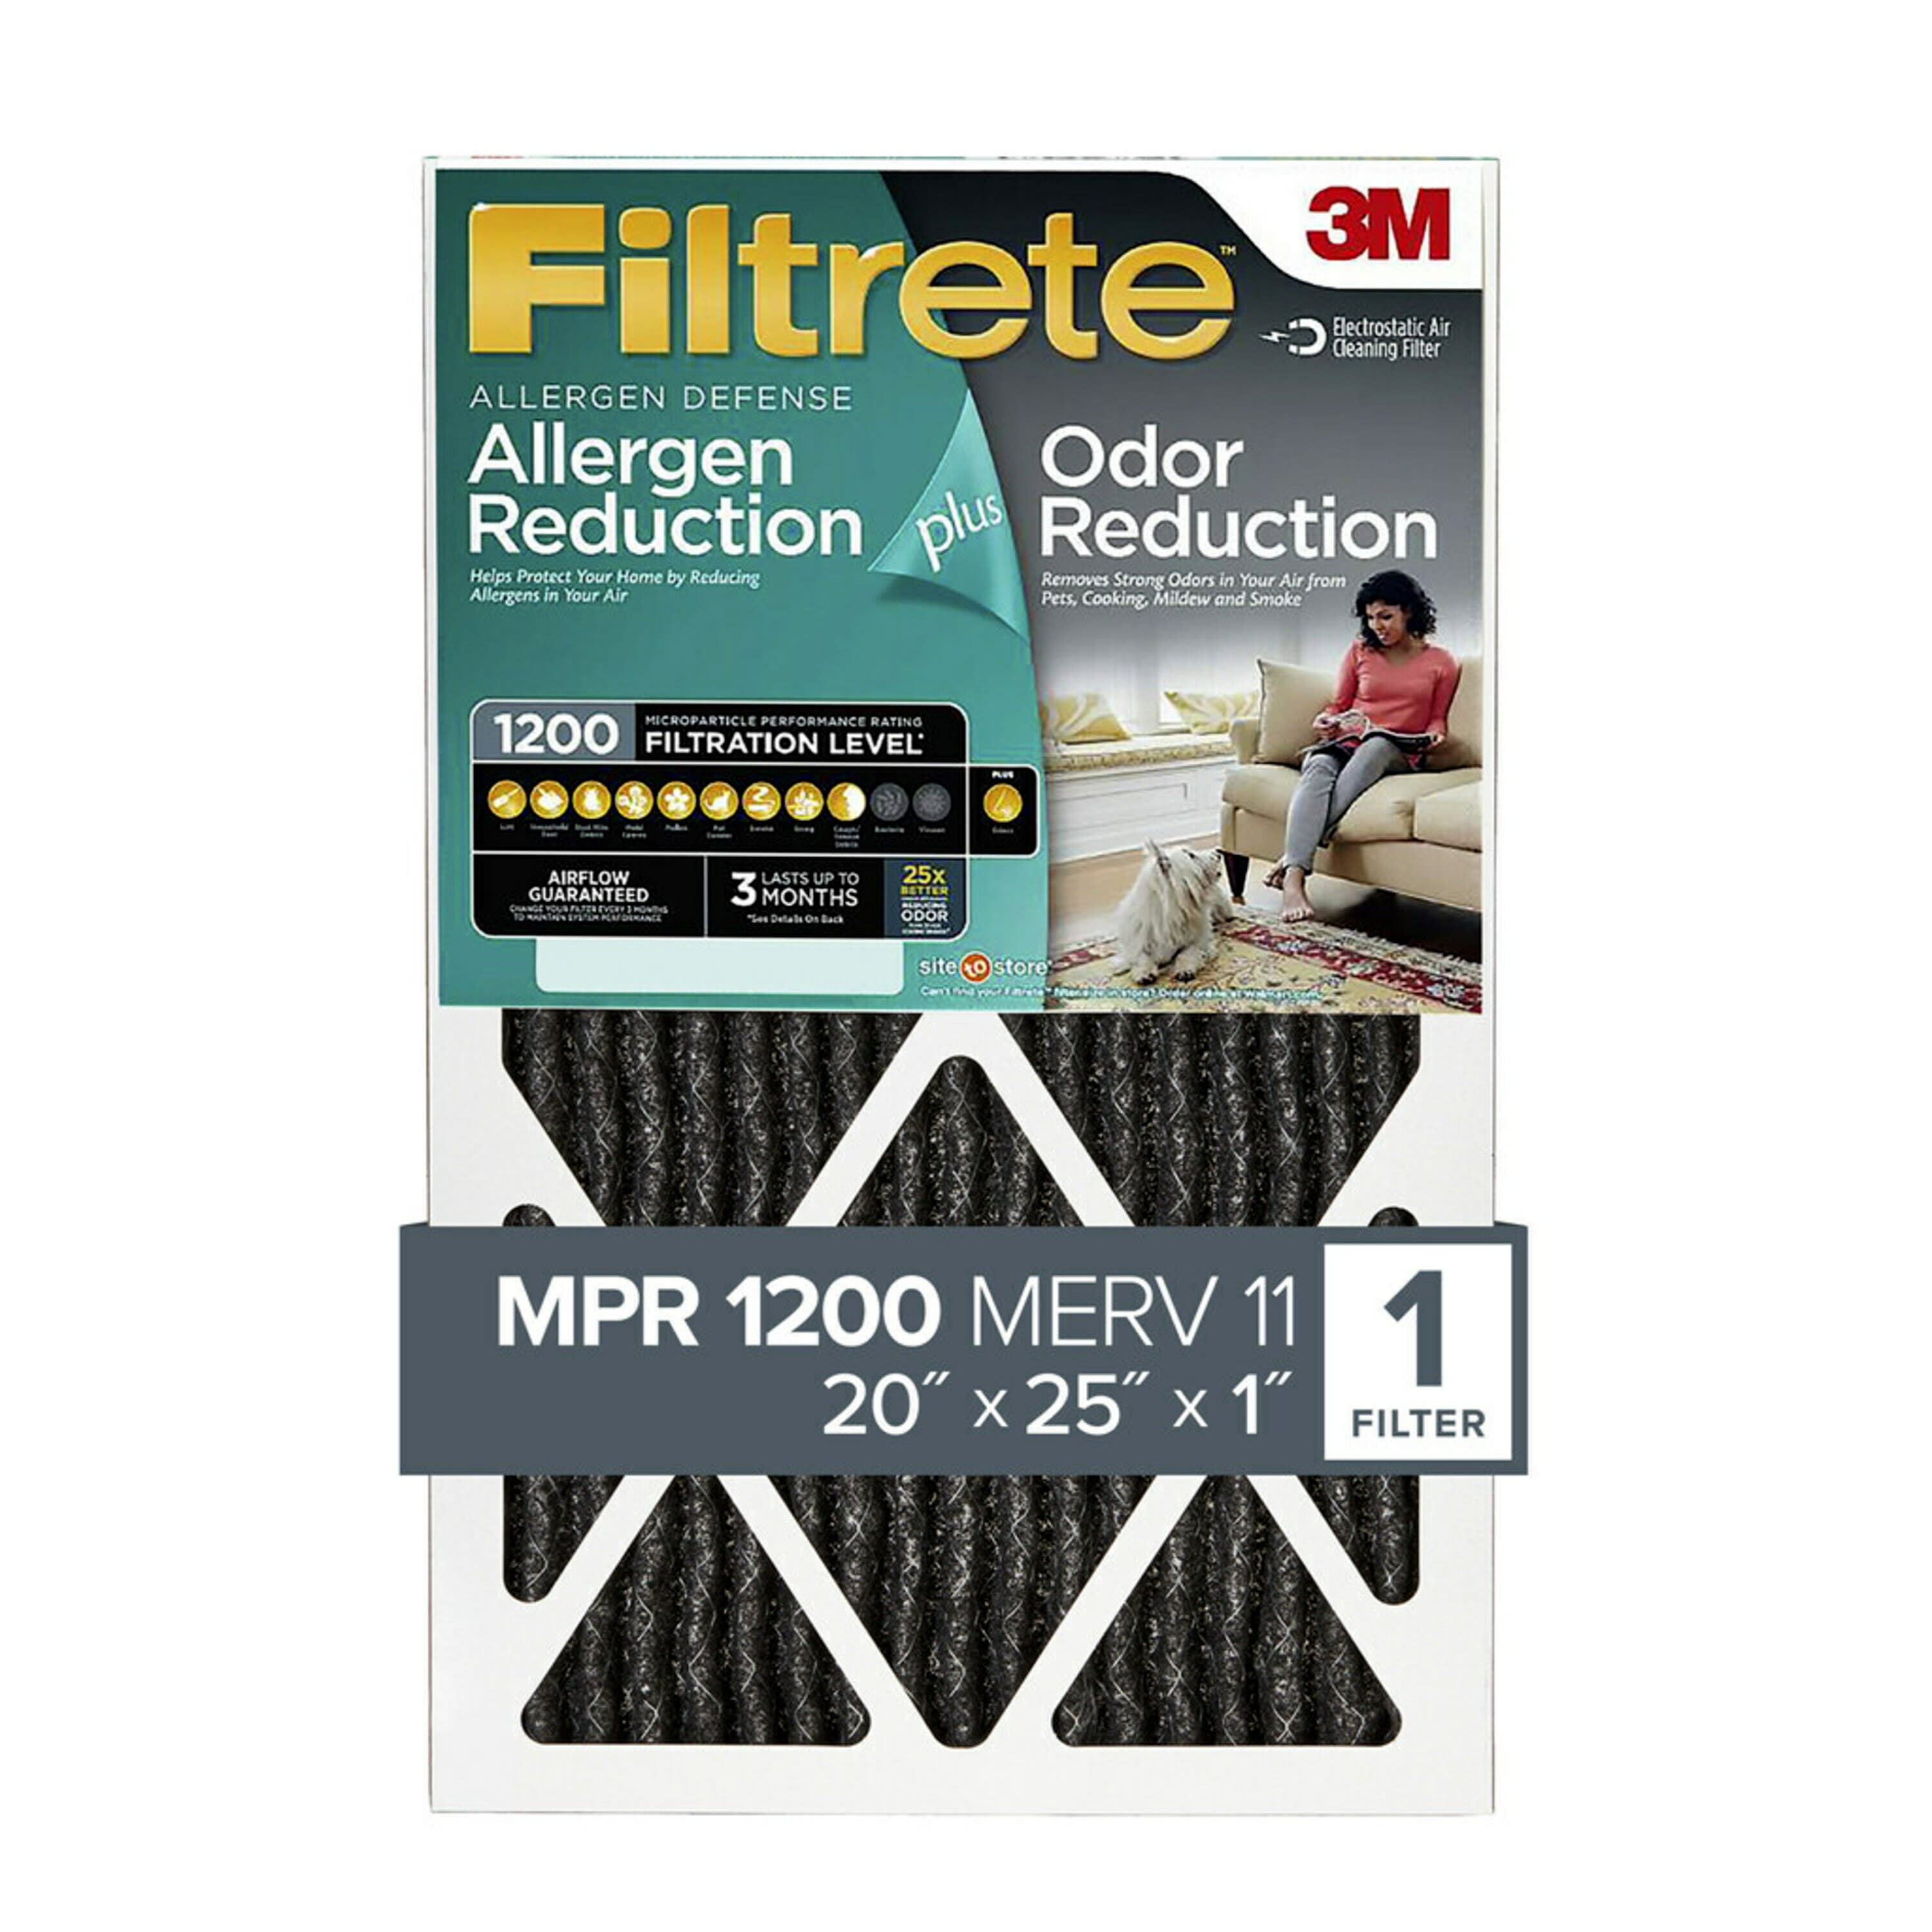 Filtrete by 3M, 20x25x1, MERV 11, Allergen Plus Odor Reduction HVAC Furnace Air Filter, Captures Pet Dander, Pollen and Traps Odors, 1200 MPR, 1 Filter